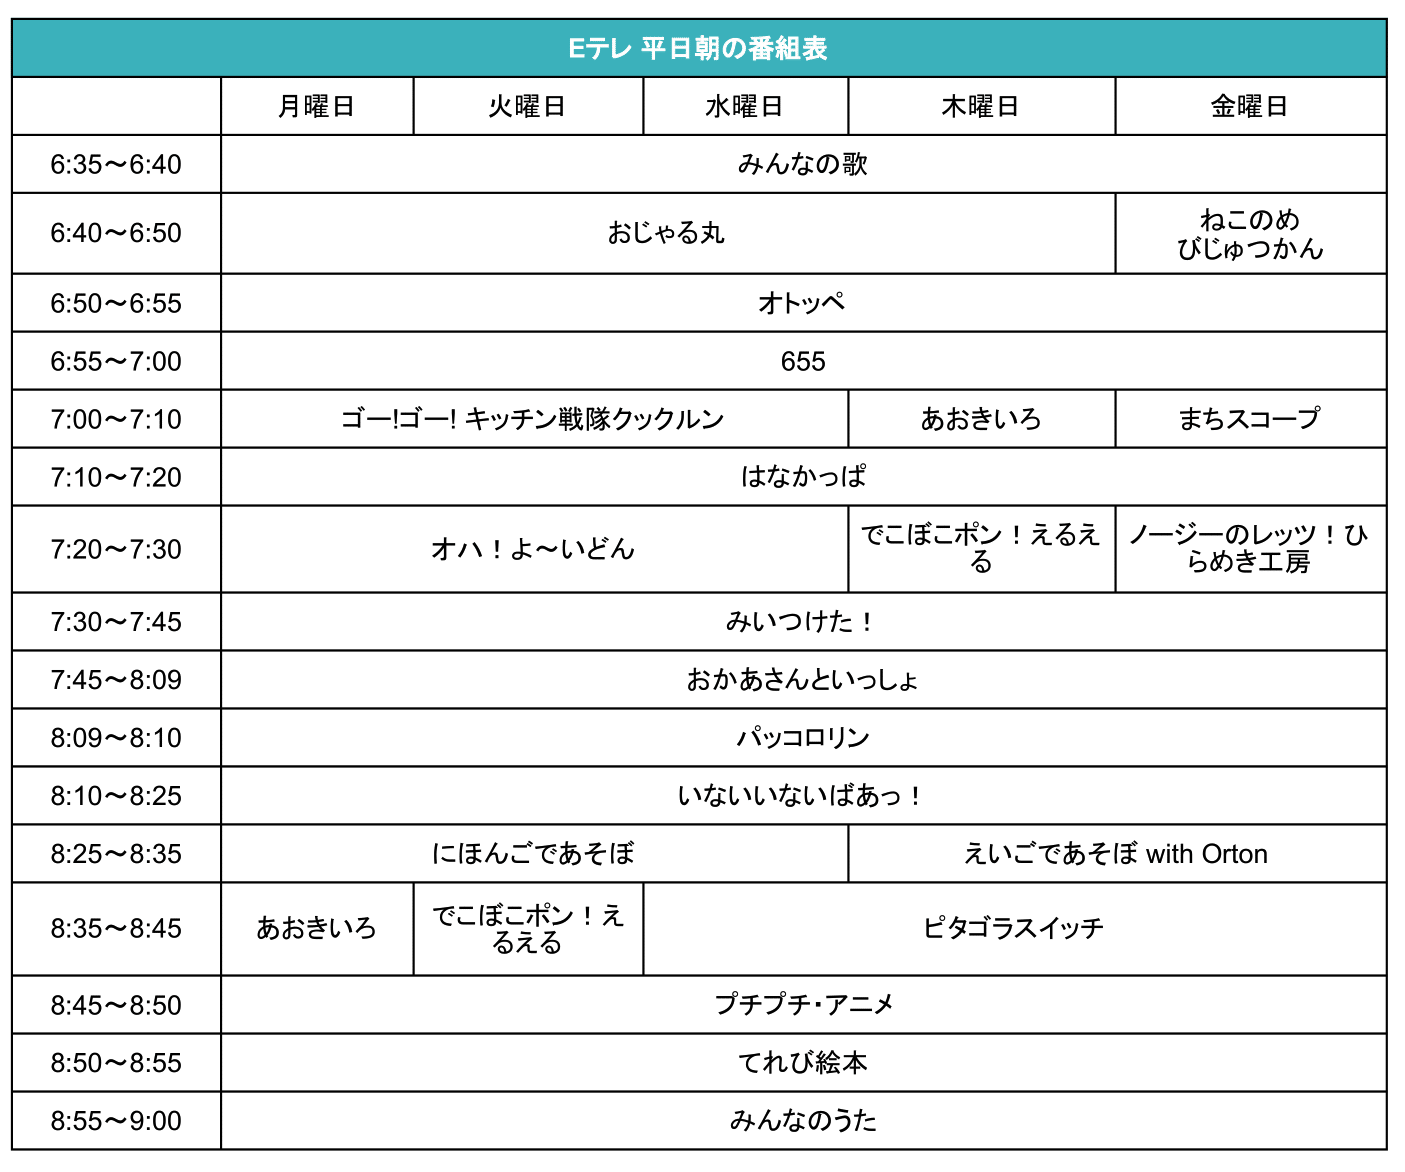 NHK,Eテレ,番組表,2022,子供番組,放送時間,変更